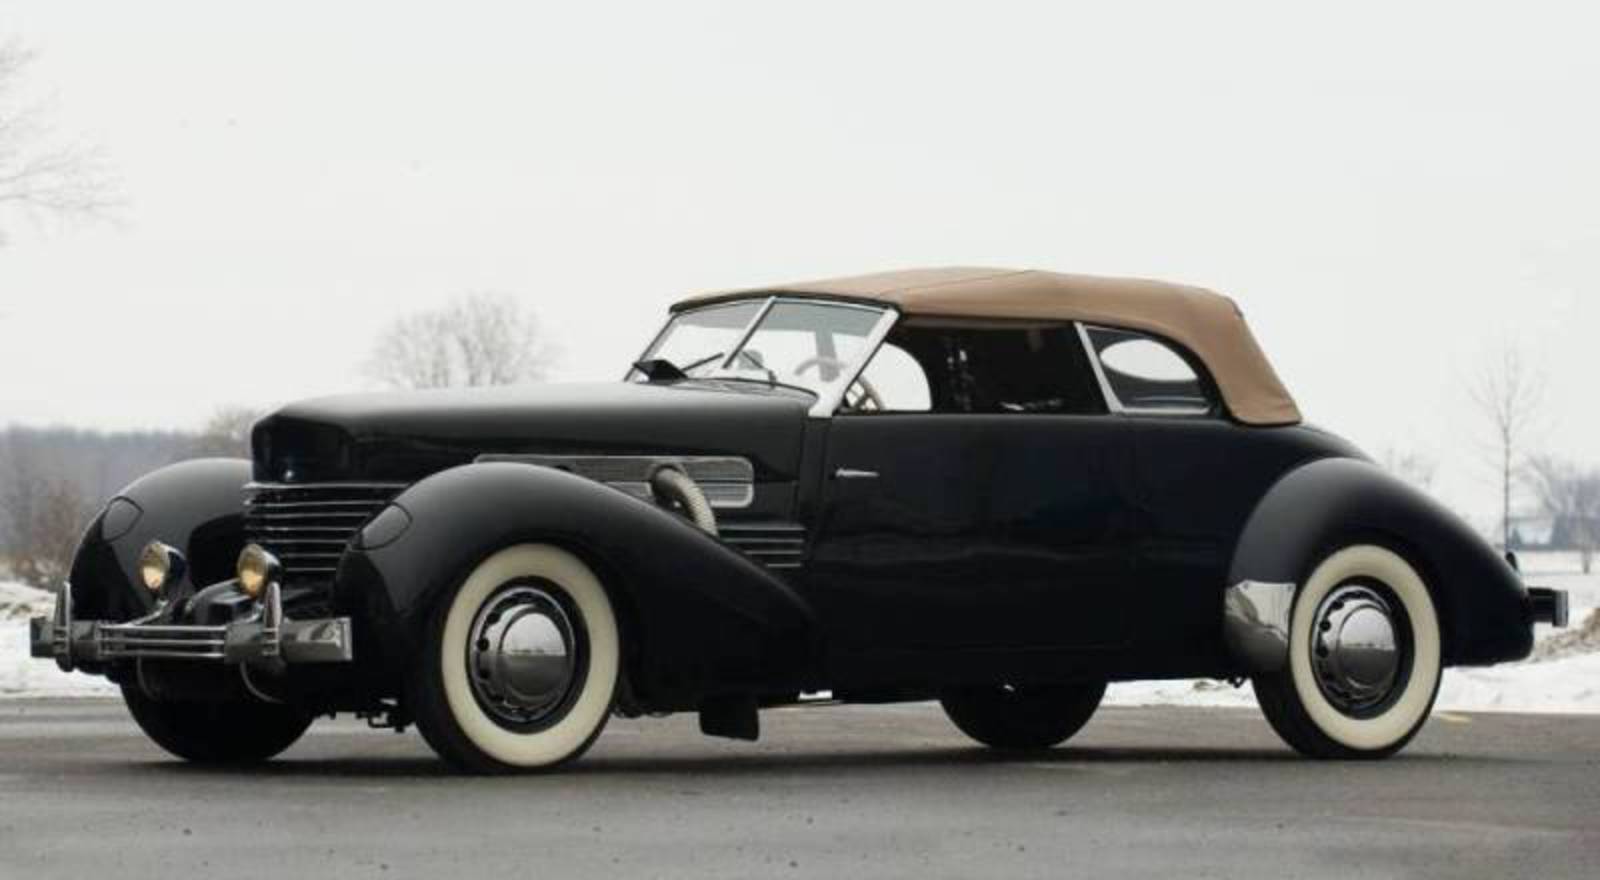 1937 Cord 812 SC Phaeton - Aucton Results: $175,000